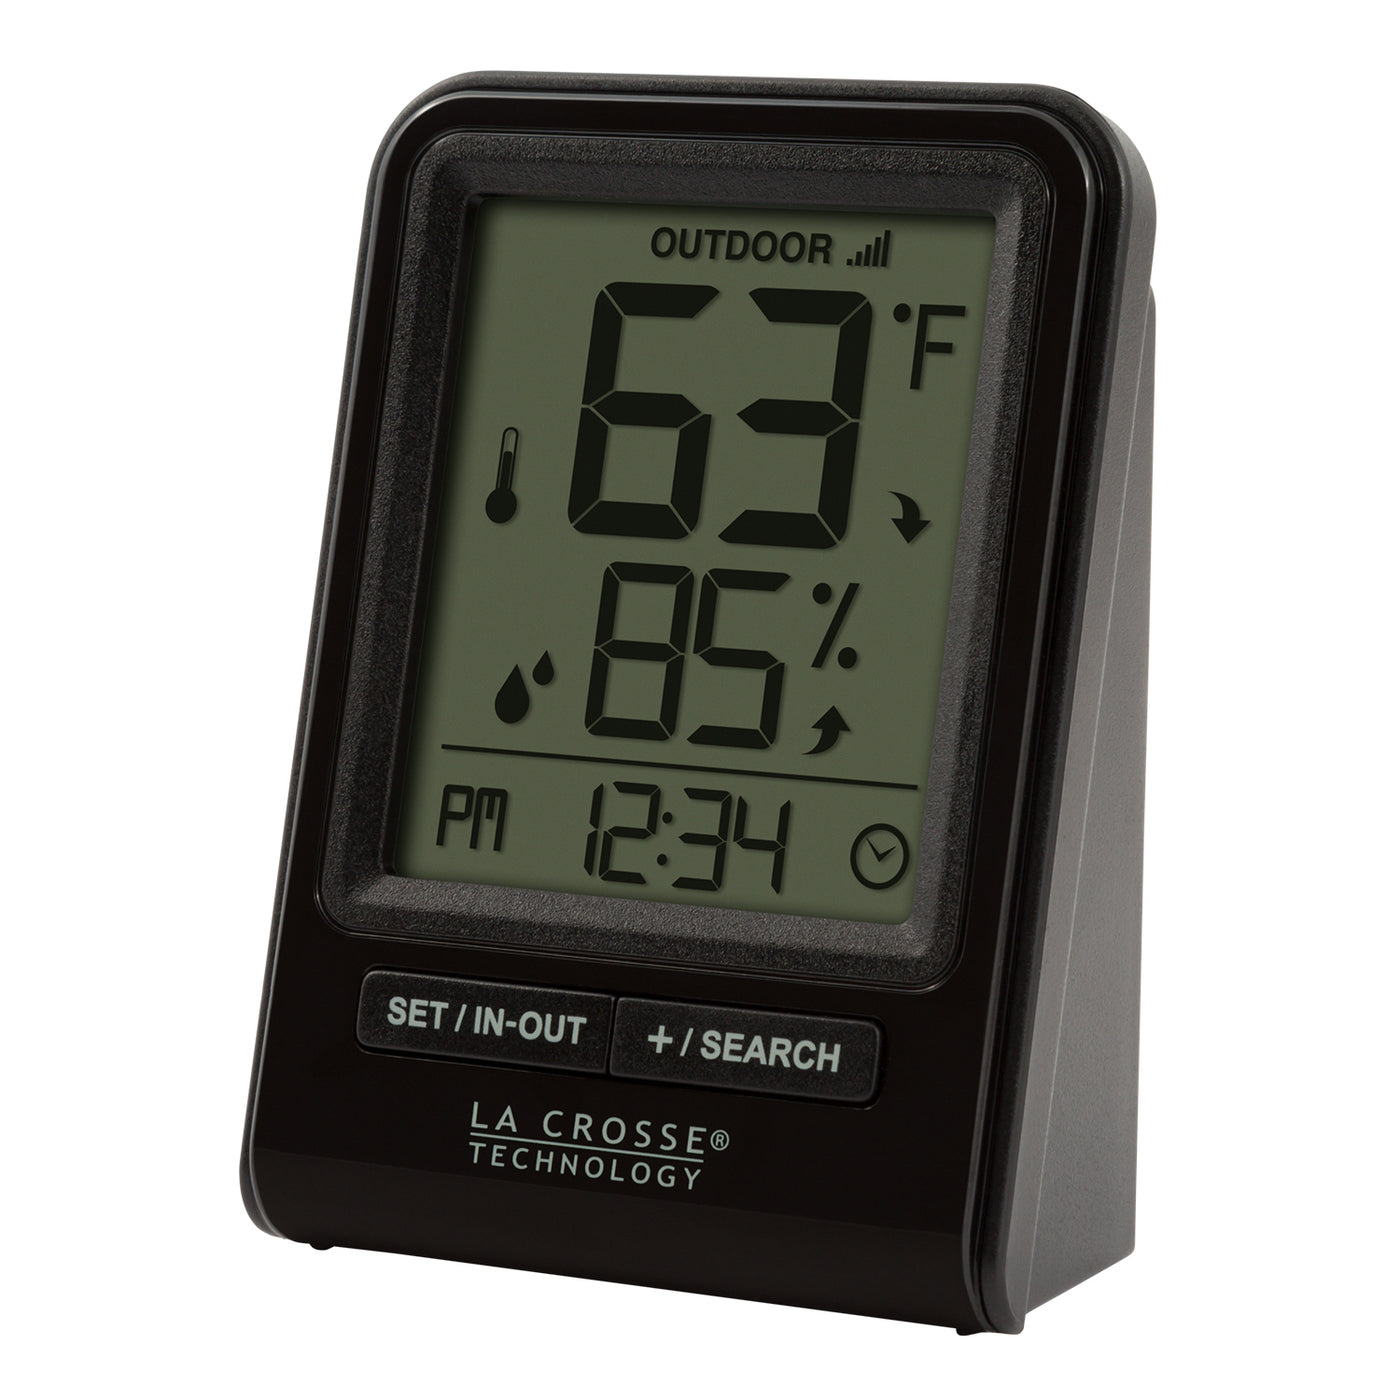 La Crosse Technology - Wireless Indoor/Outdoor Thermometer